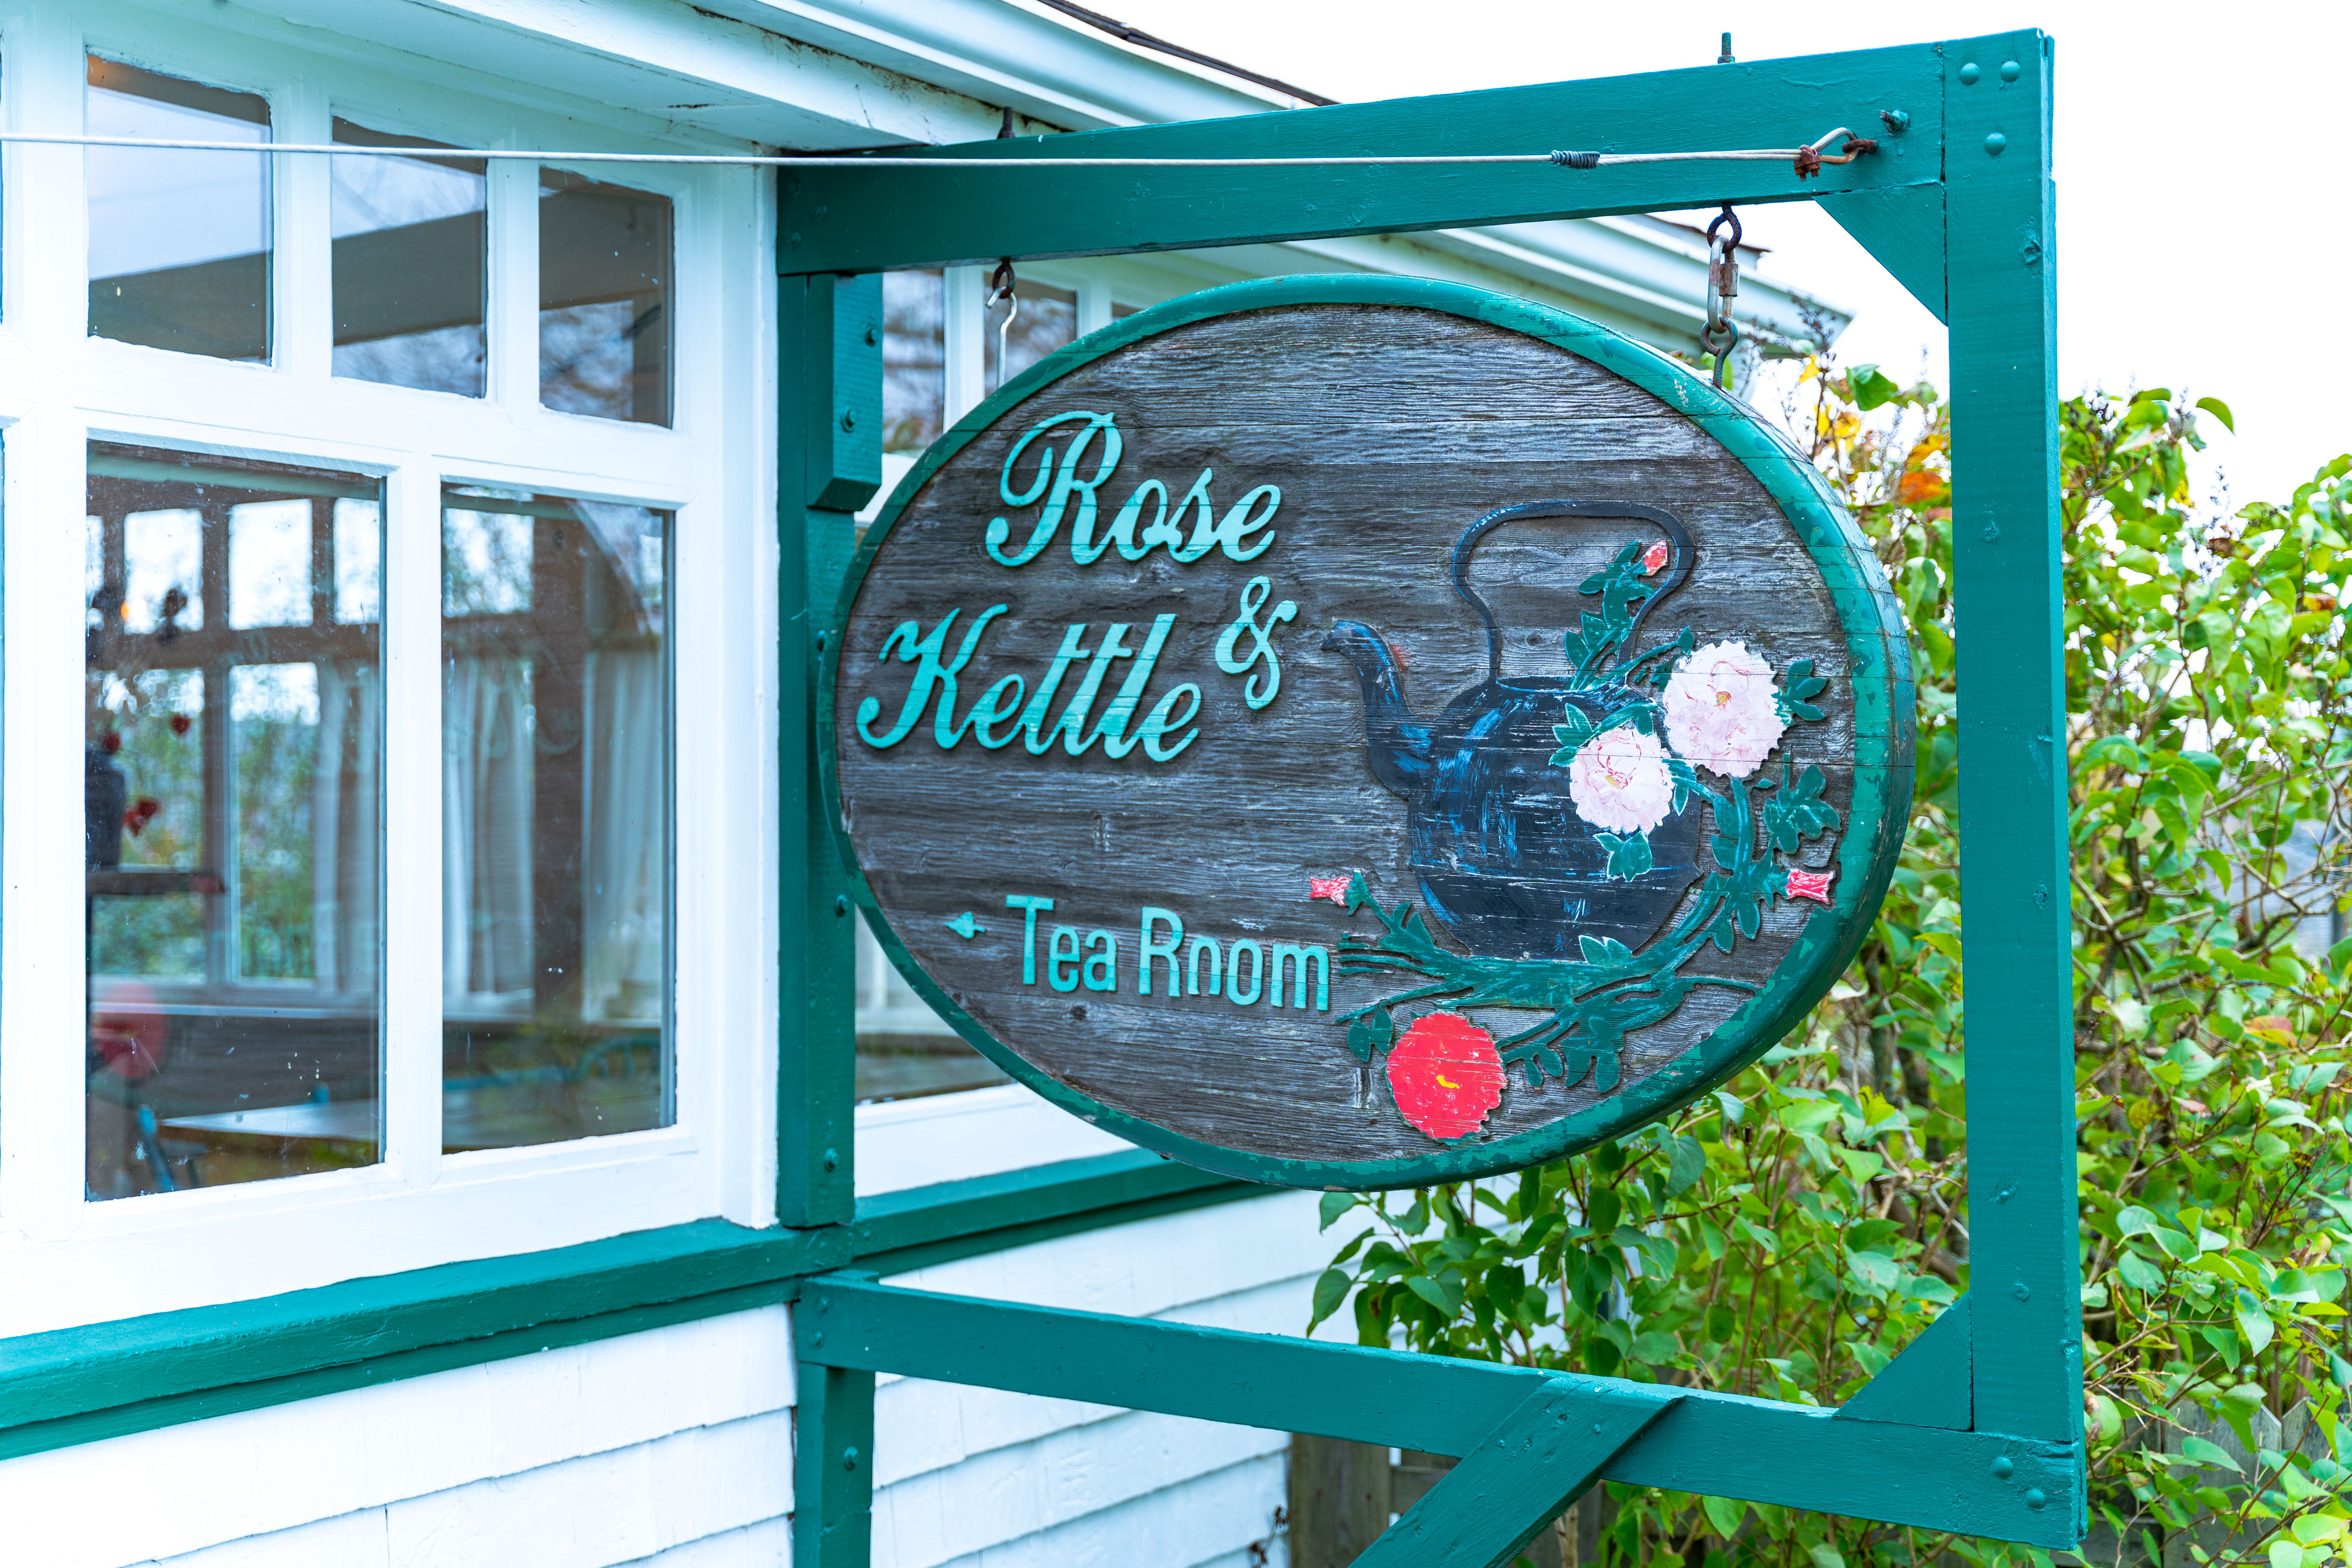 The Rose & Kettle Tea Room carousel image